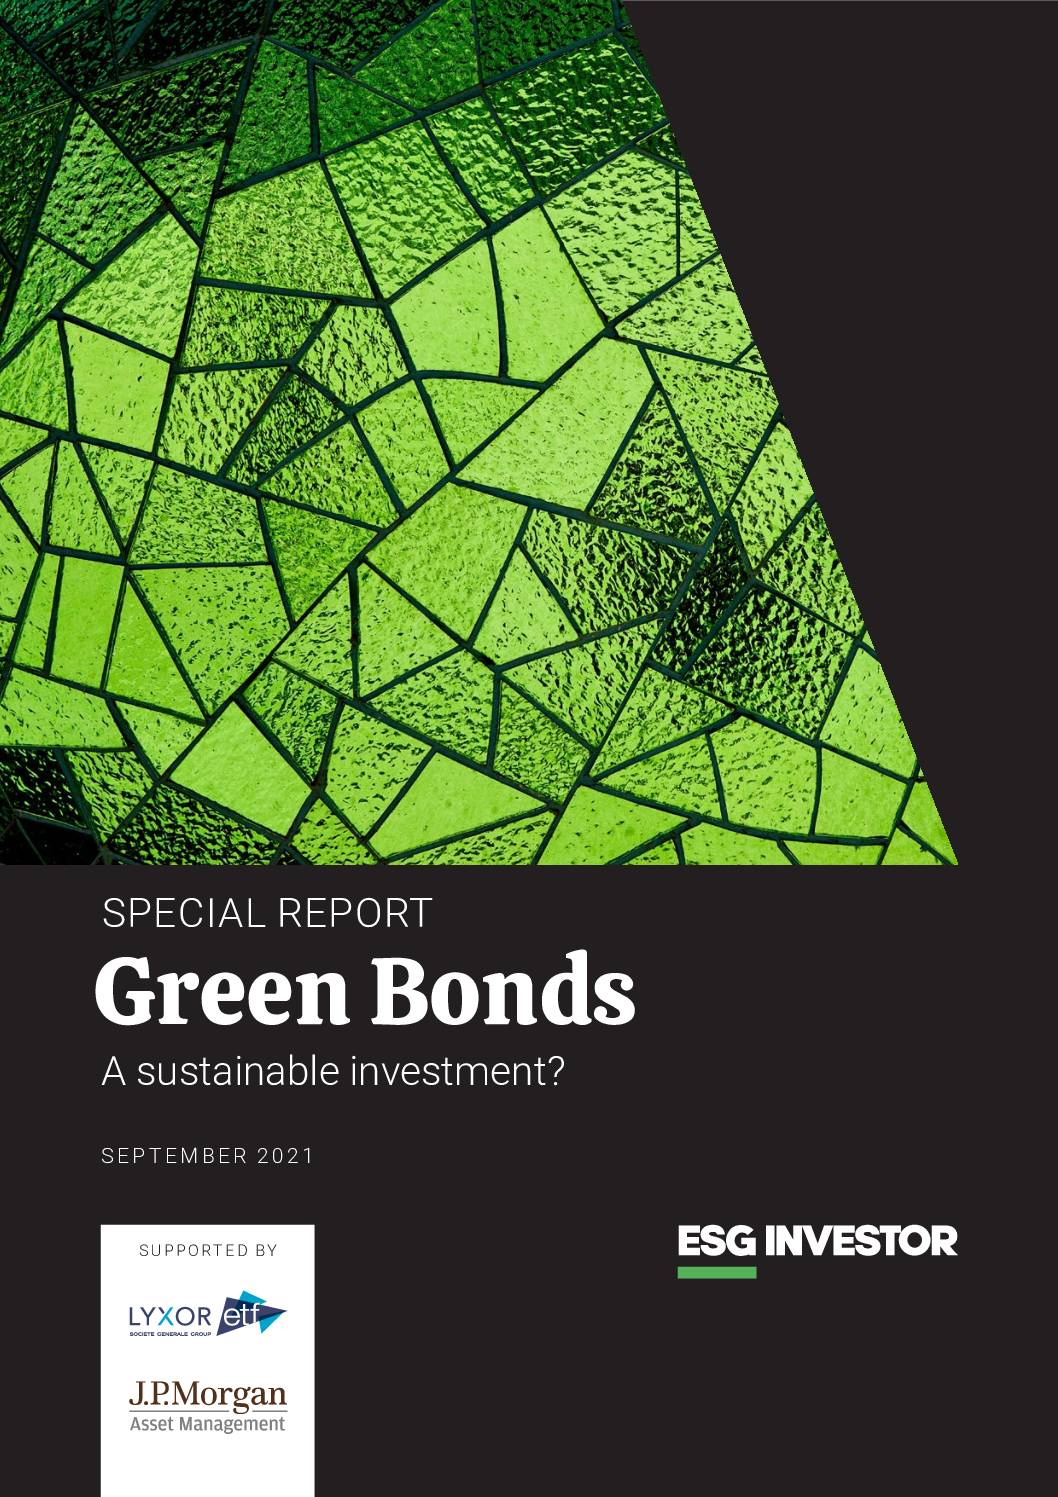 Special Report: Green Bonds